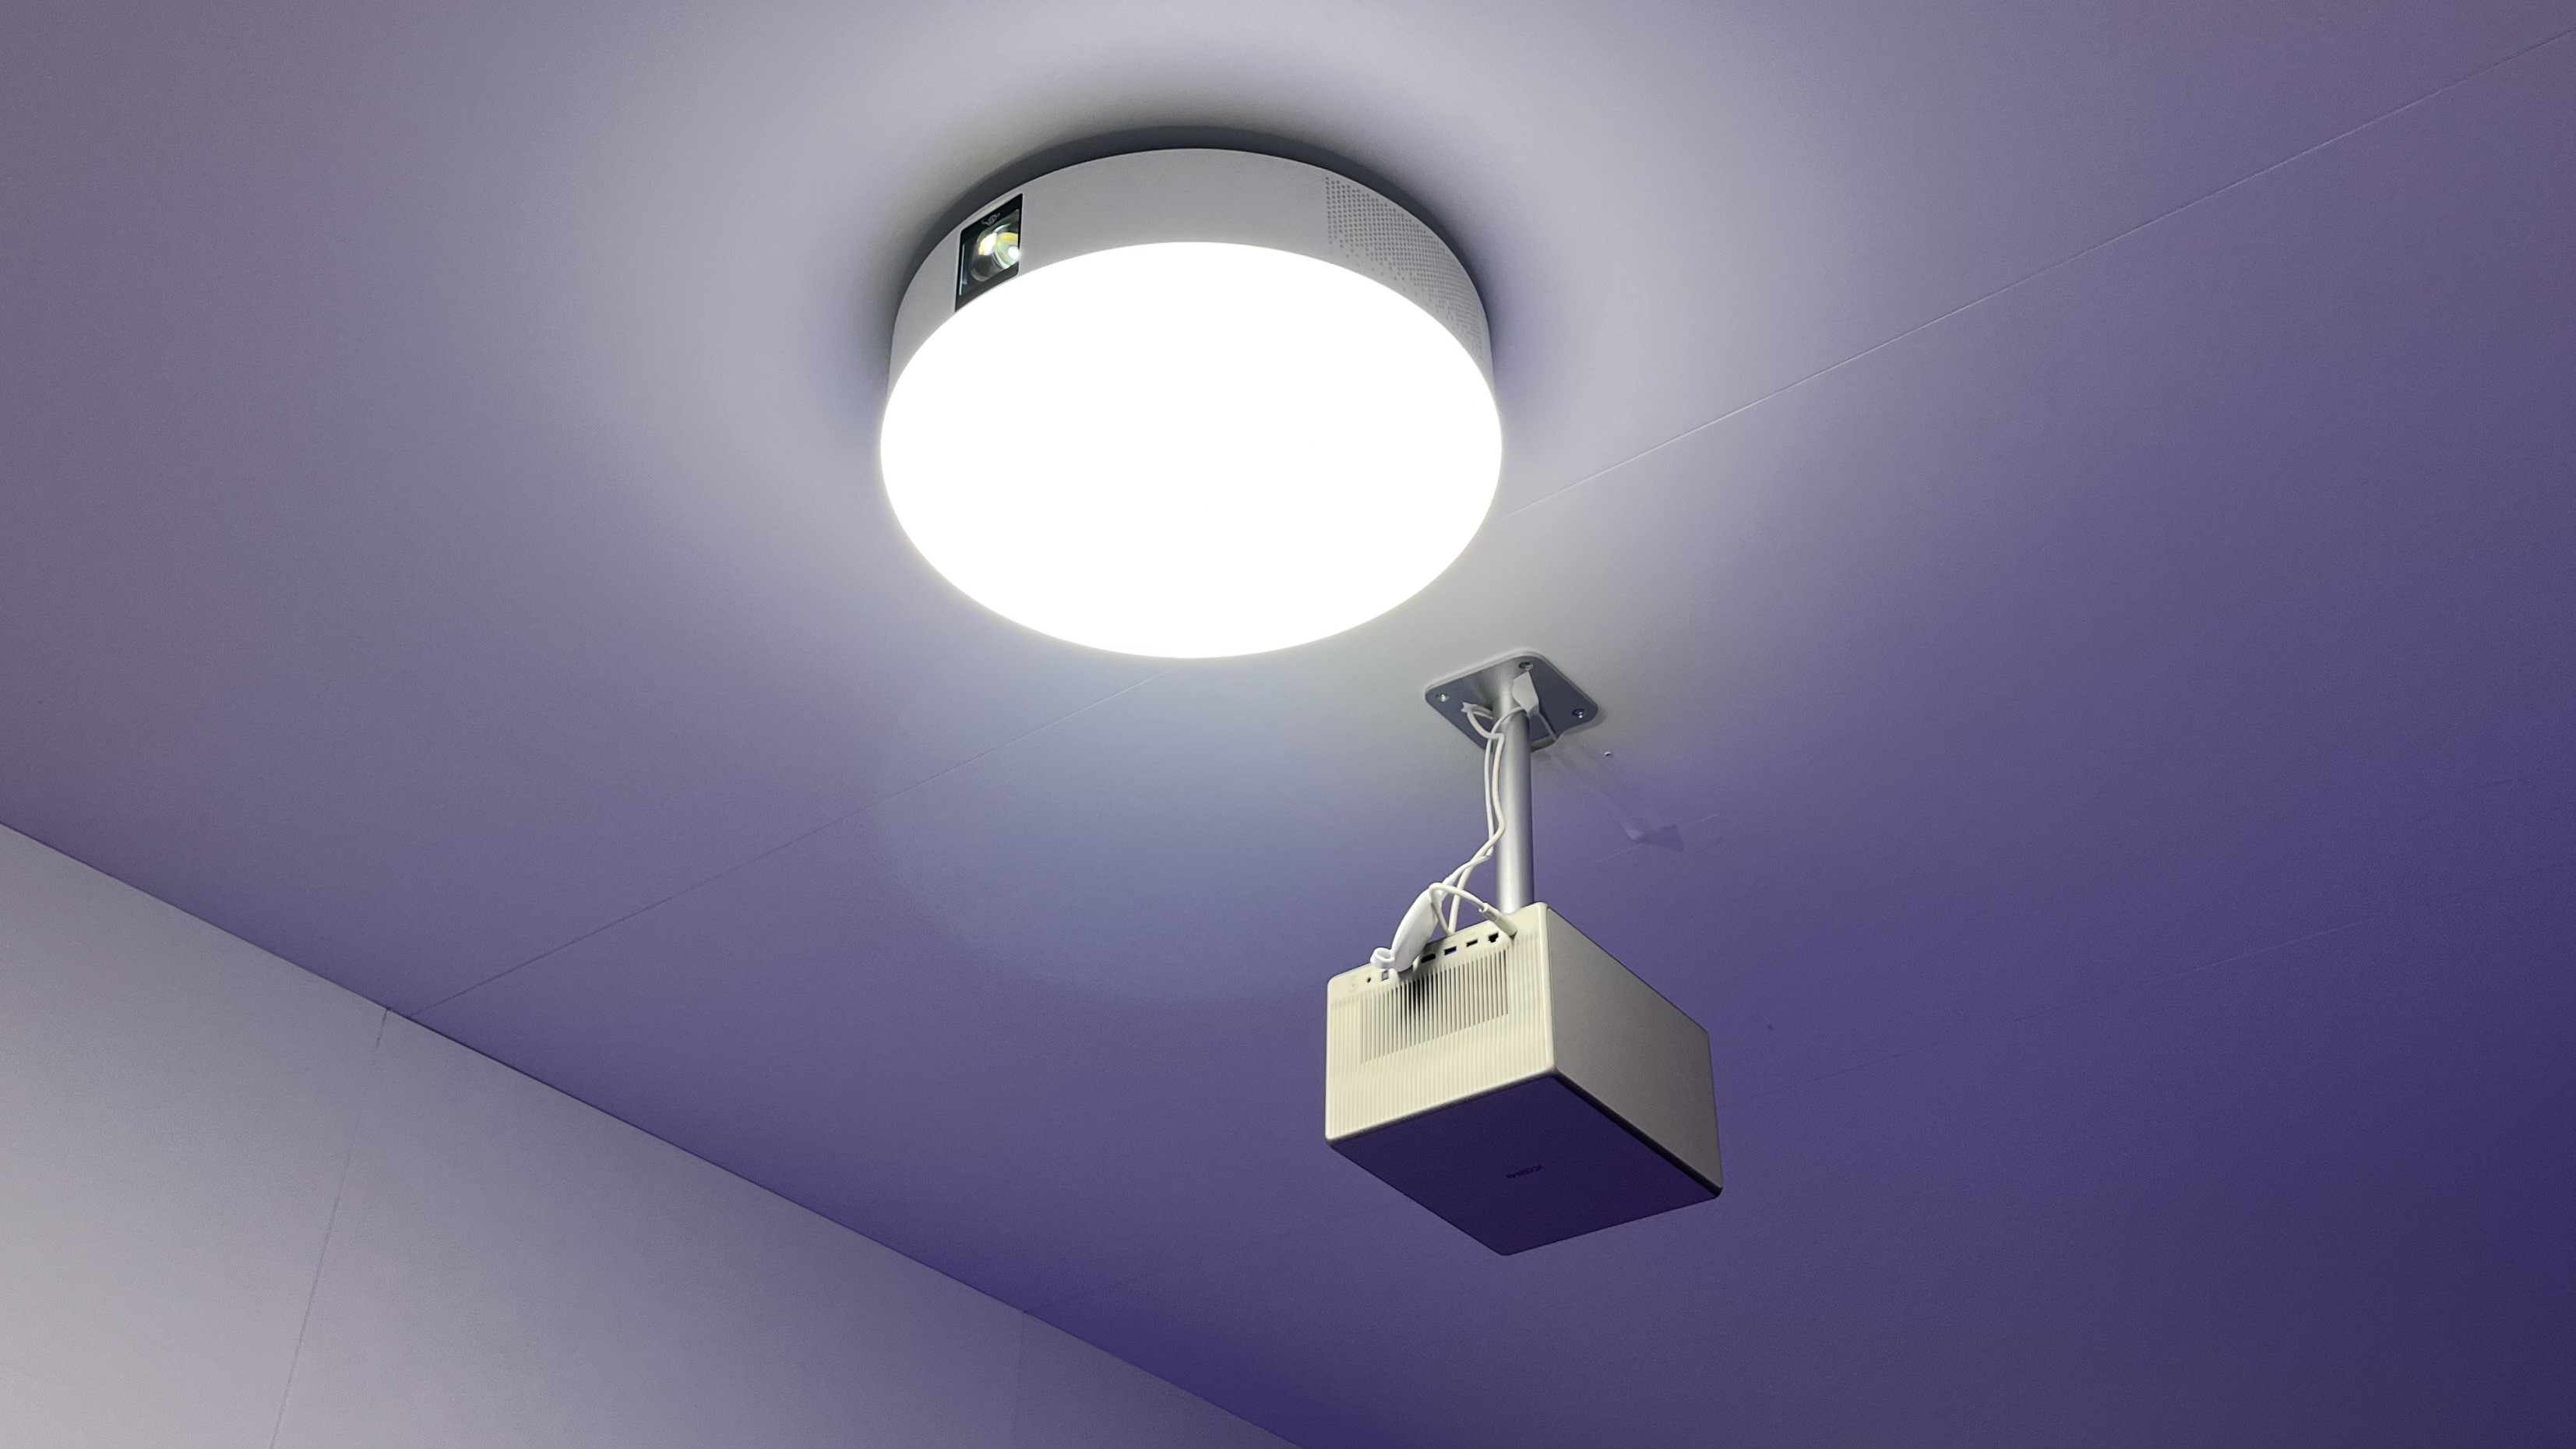 XGIMI Aladdin Ceiling Projector (Lamp Mode)